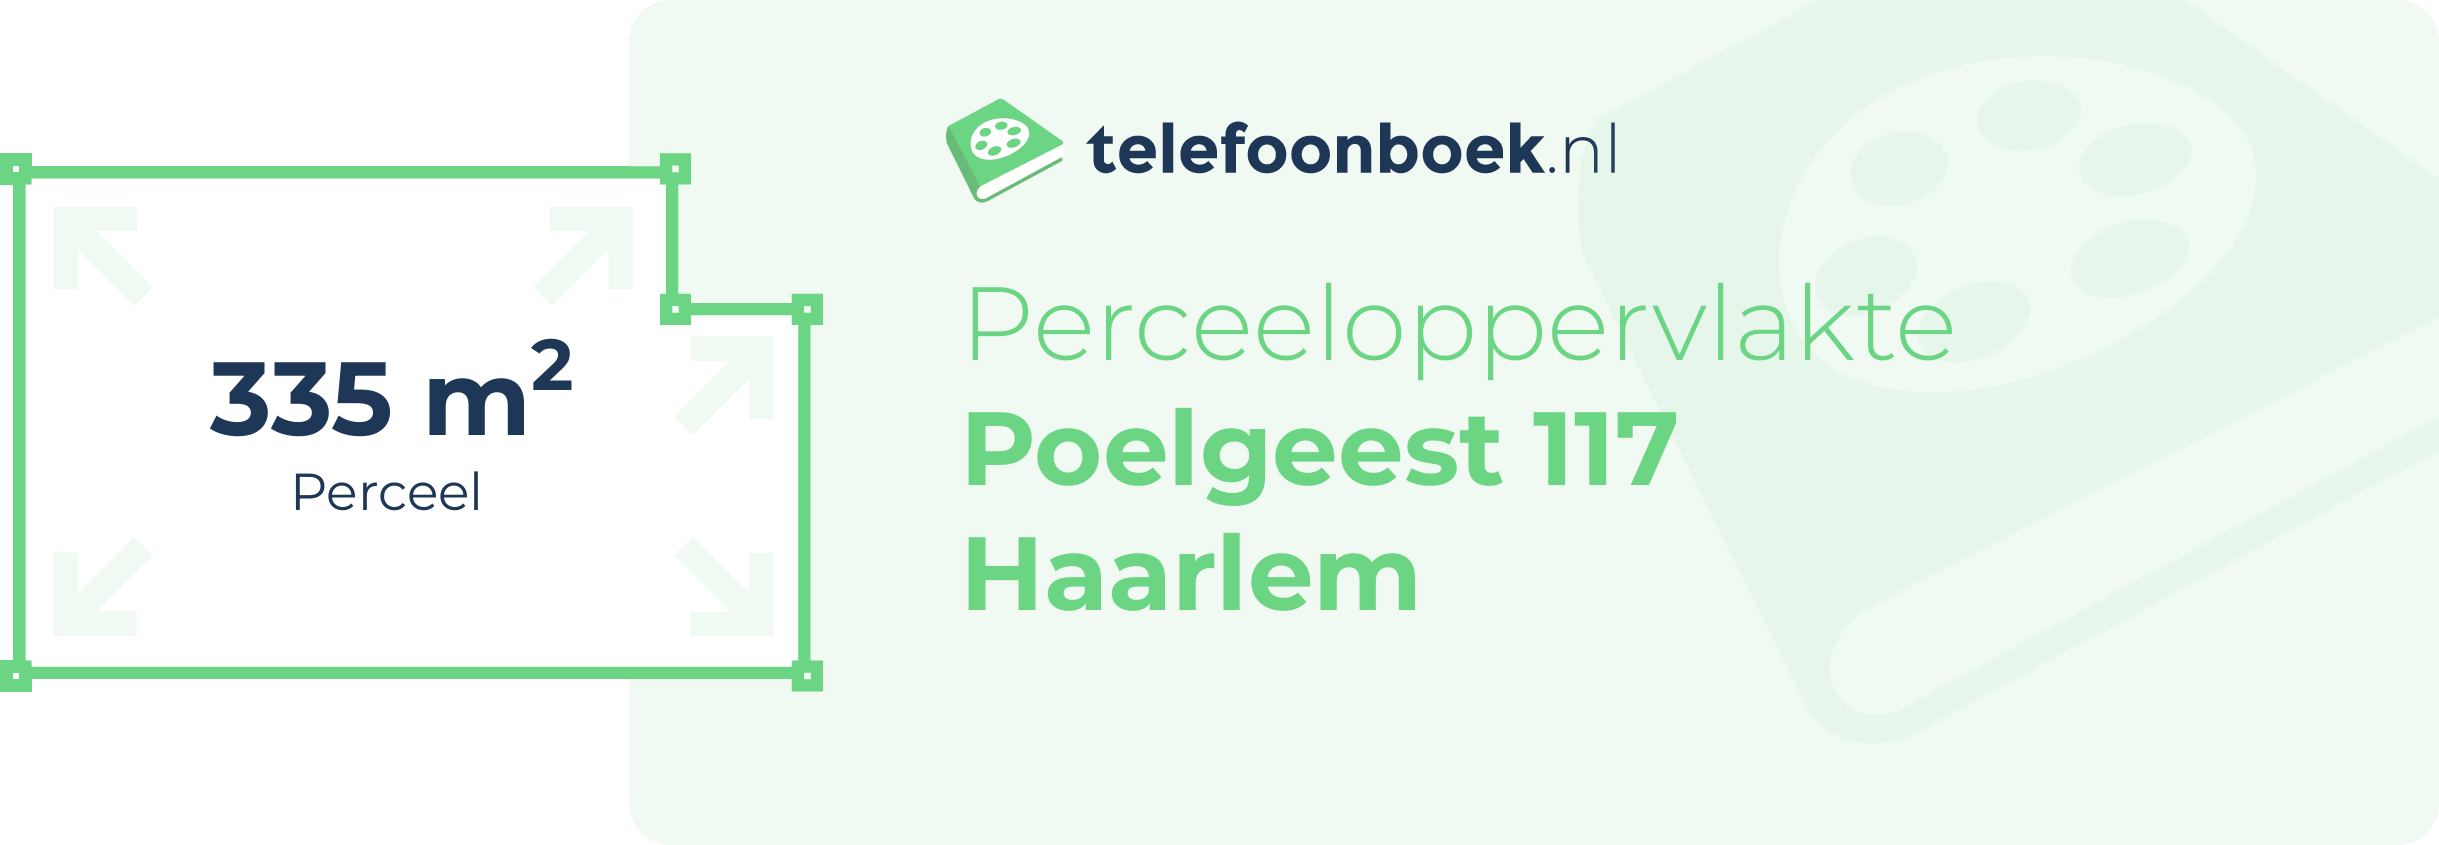 Perceeloppervlakte Poelgeest 117 Haarlem